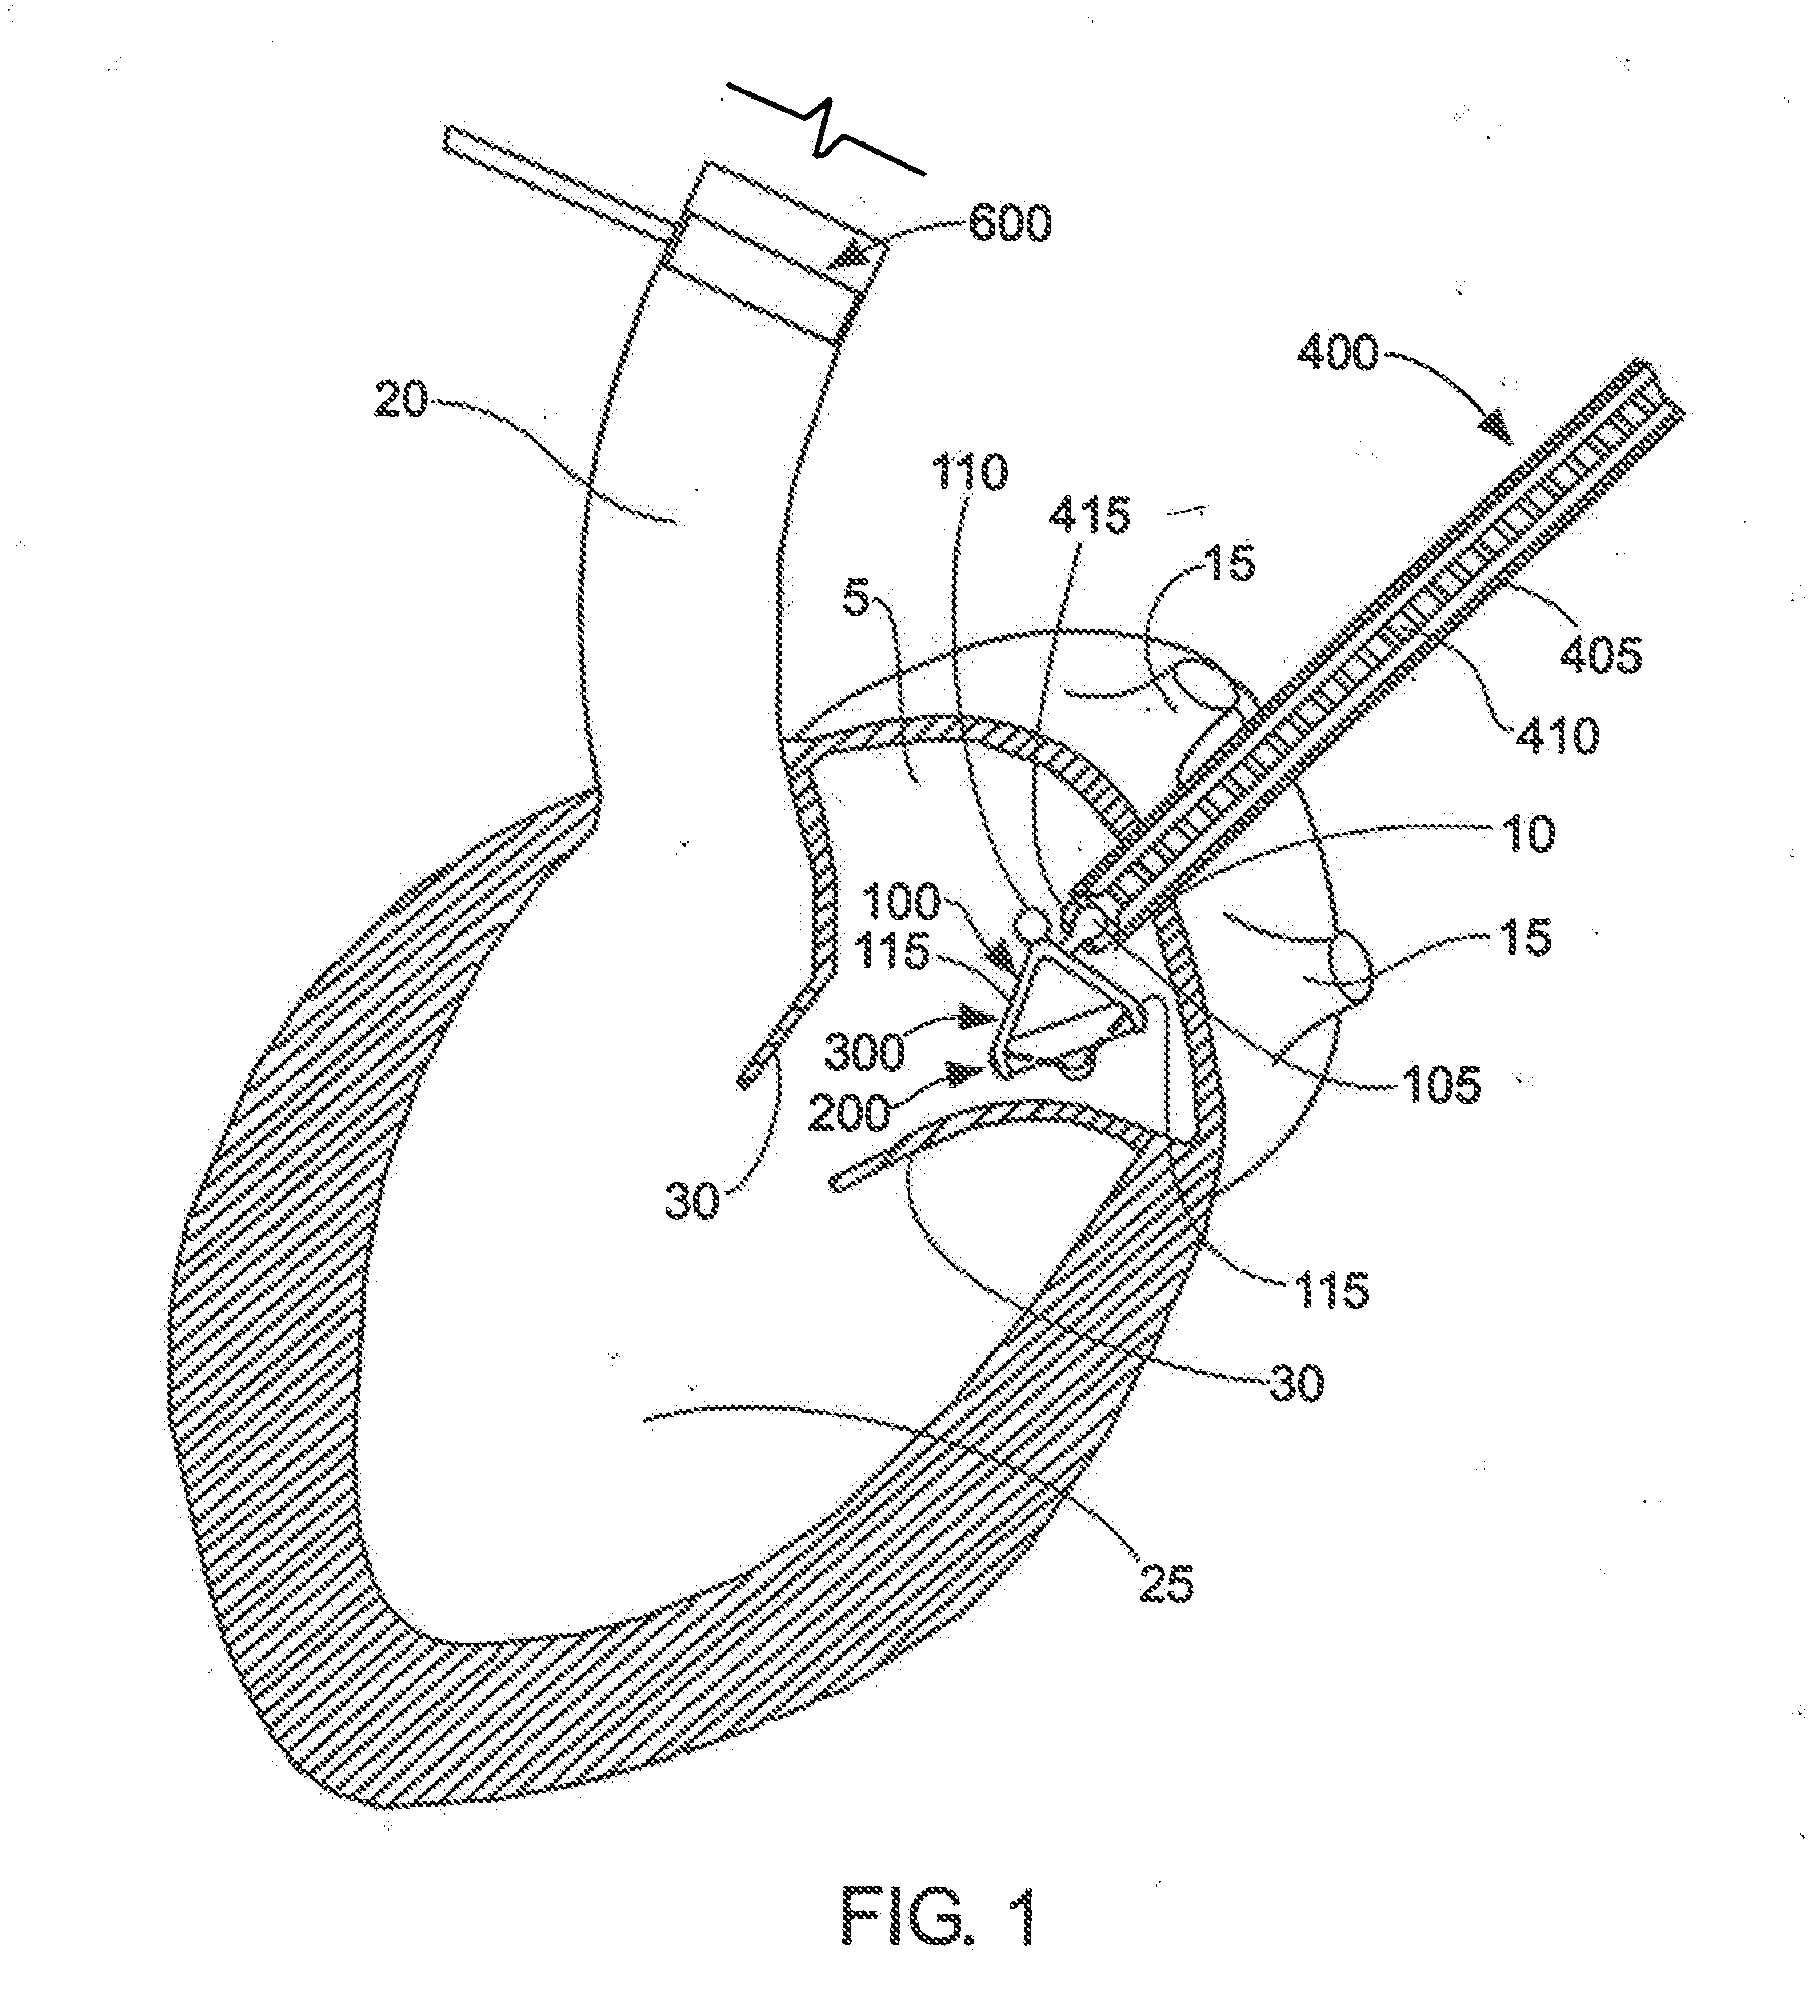 Apparatus for replacing a cardiac valve